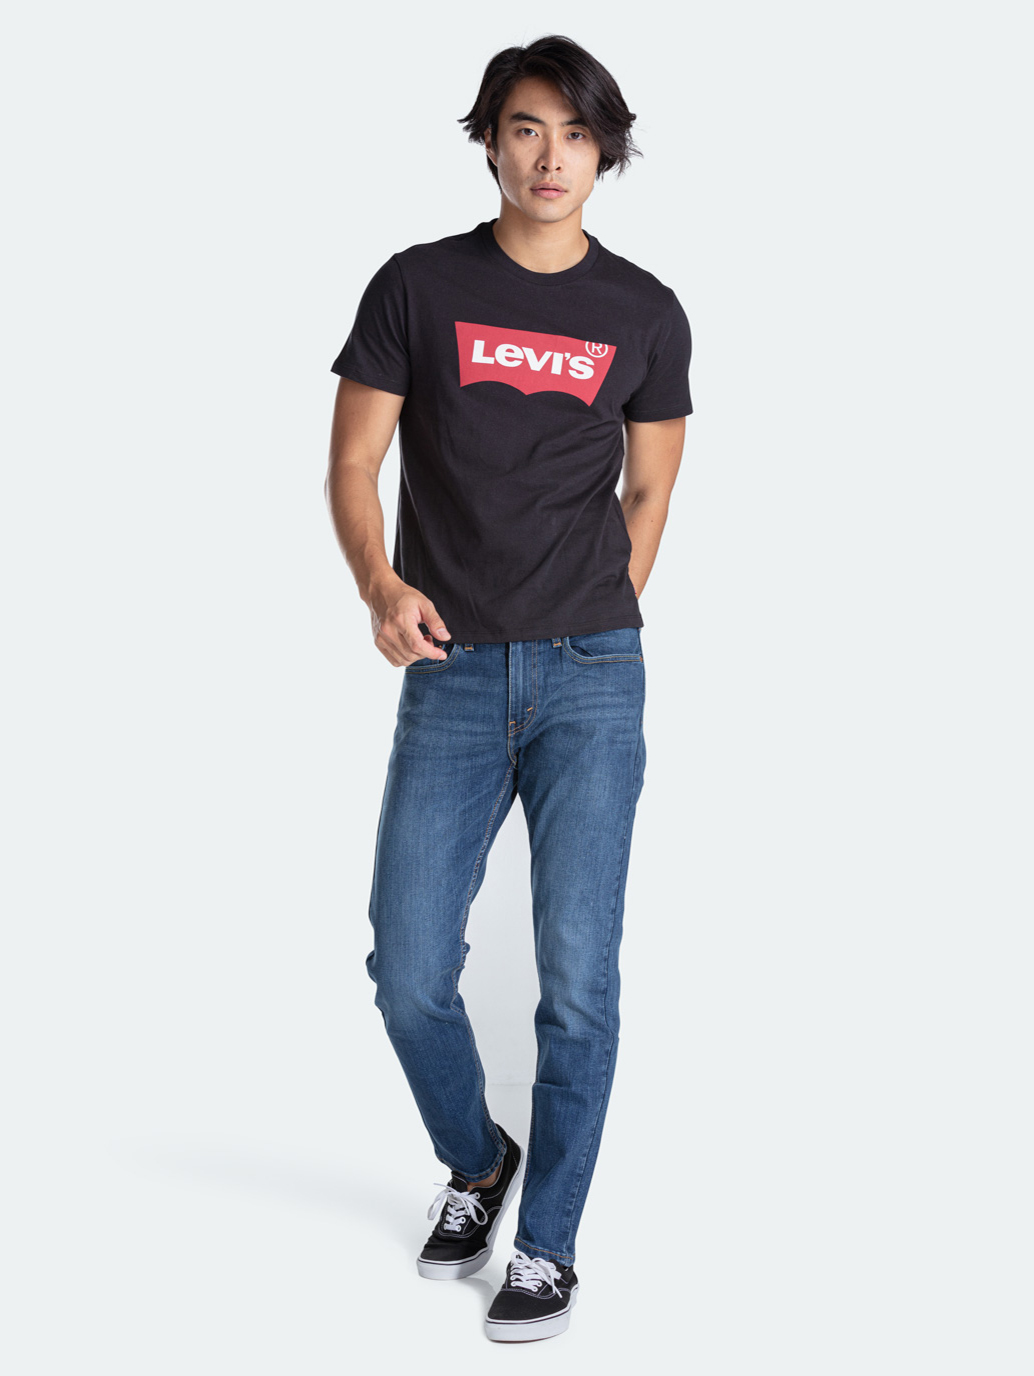 Black Graphic T-Shirt For Men - 100% Cotton Jersey